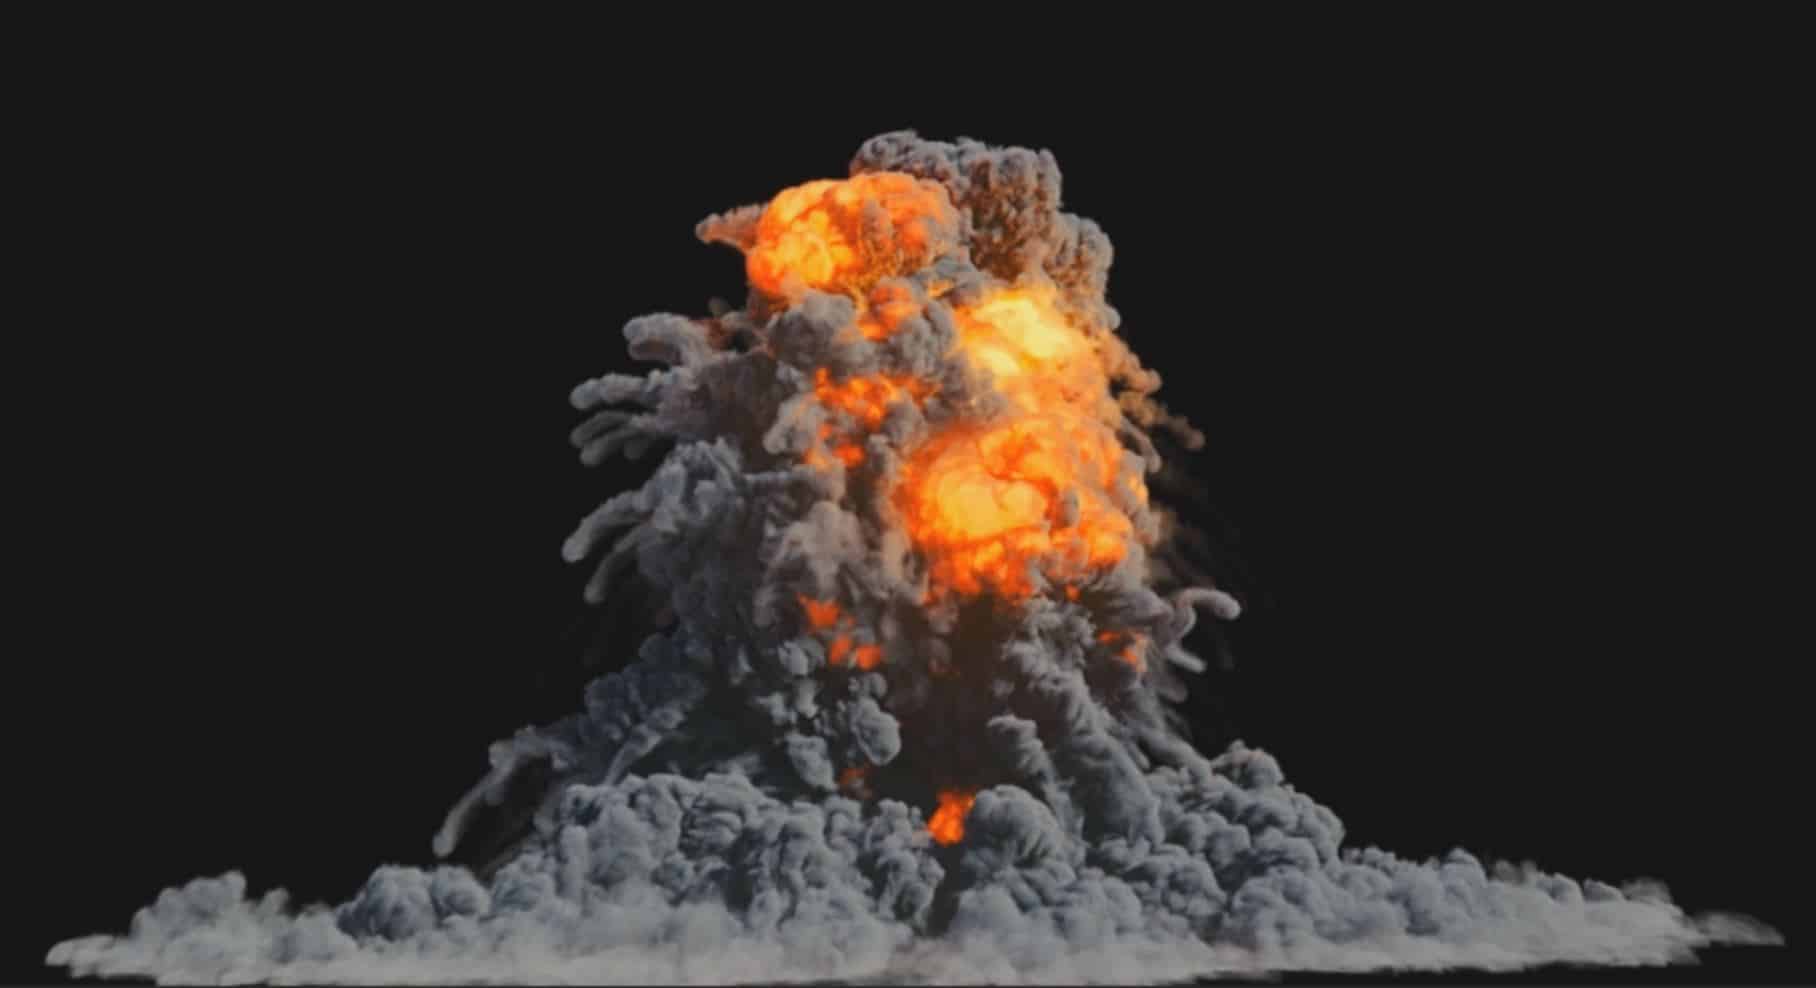 Houdini explosion megapack – 4 Explosions